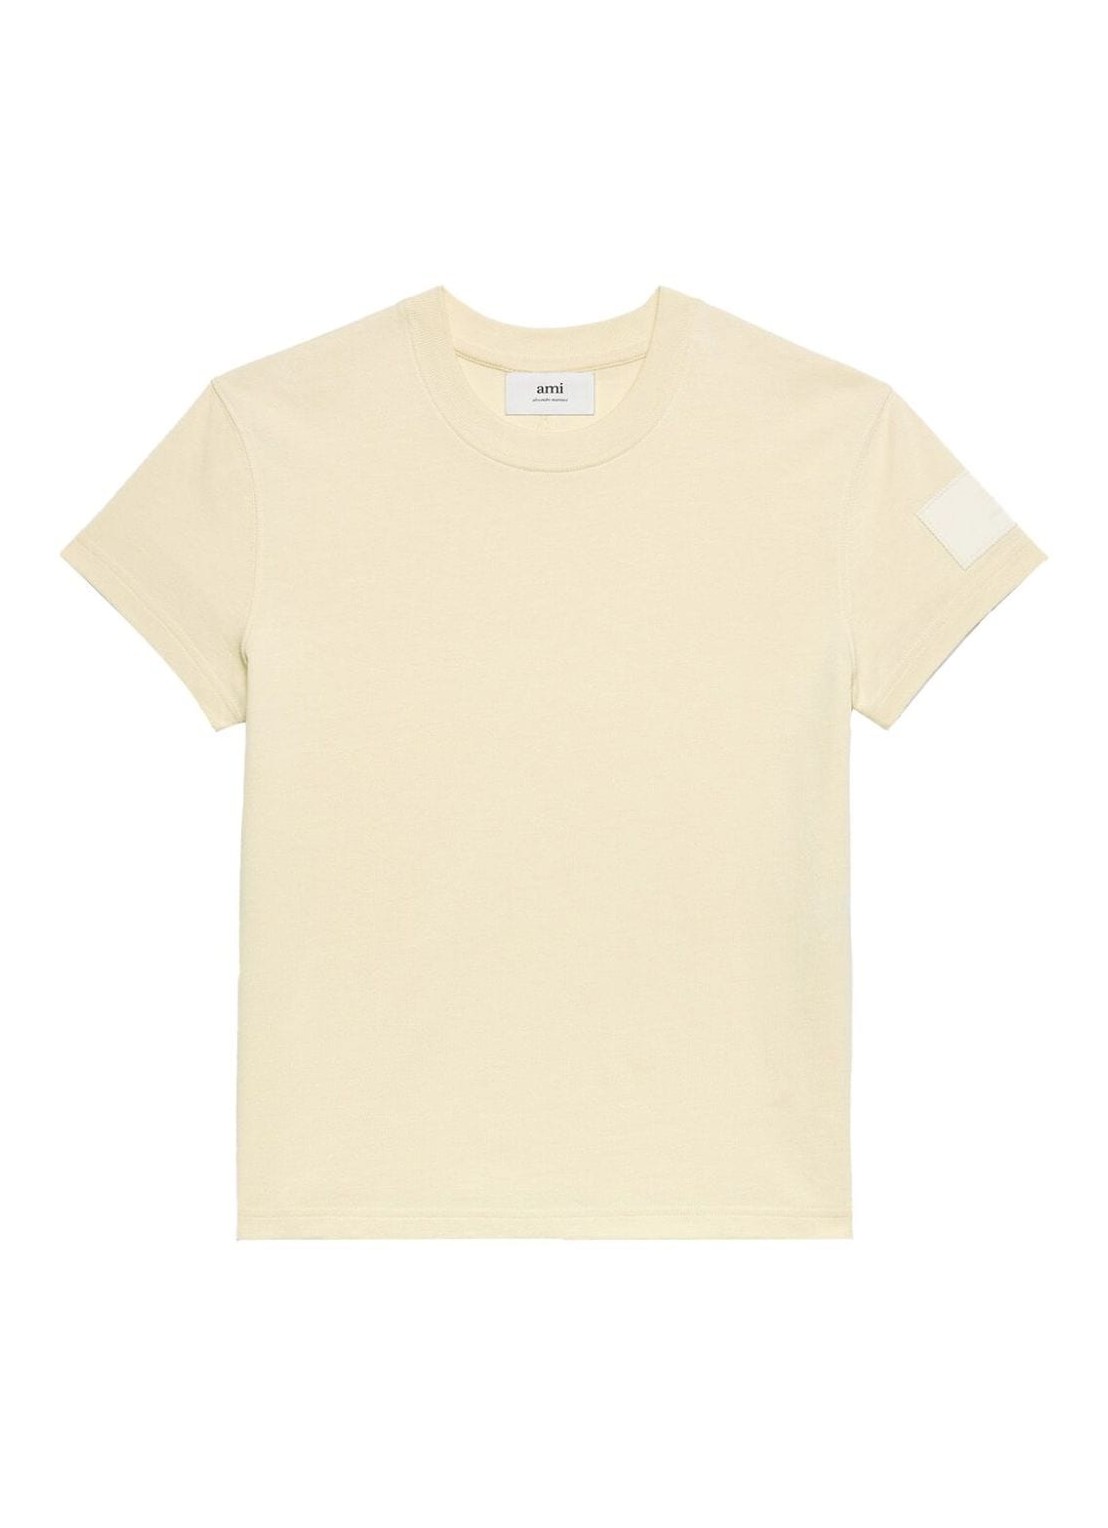 Camiseta ami t-shirt man fade out tshirt uts017726 185 talla M
 